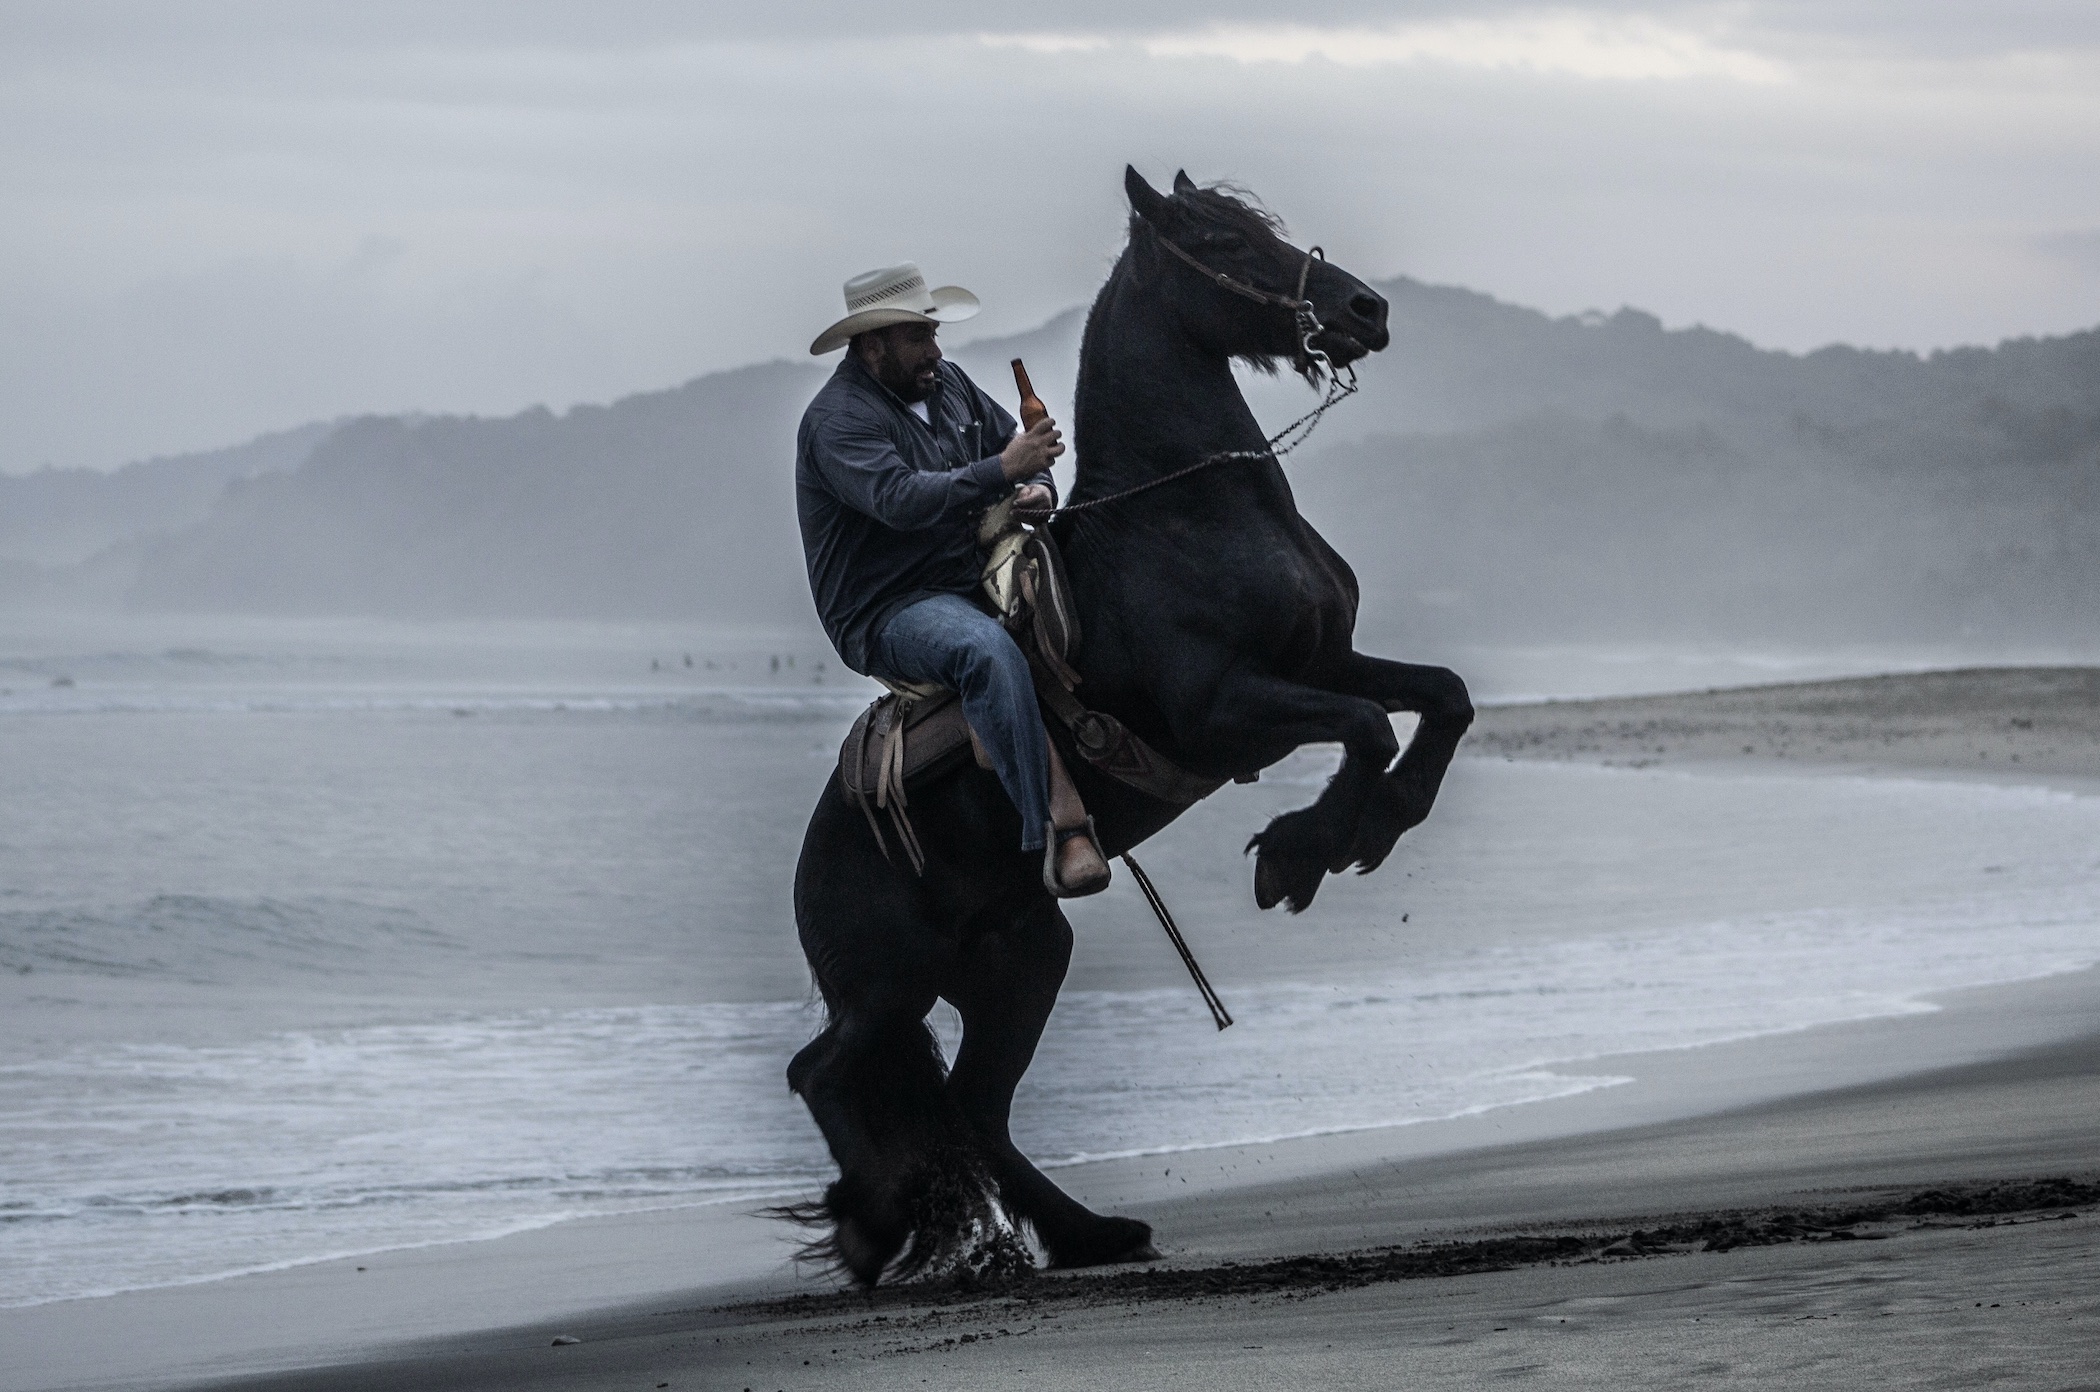 Man riding horse with beer bottle in hand; image by Antonio Piña, via Unsplash.com.